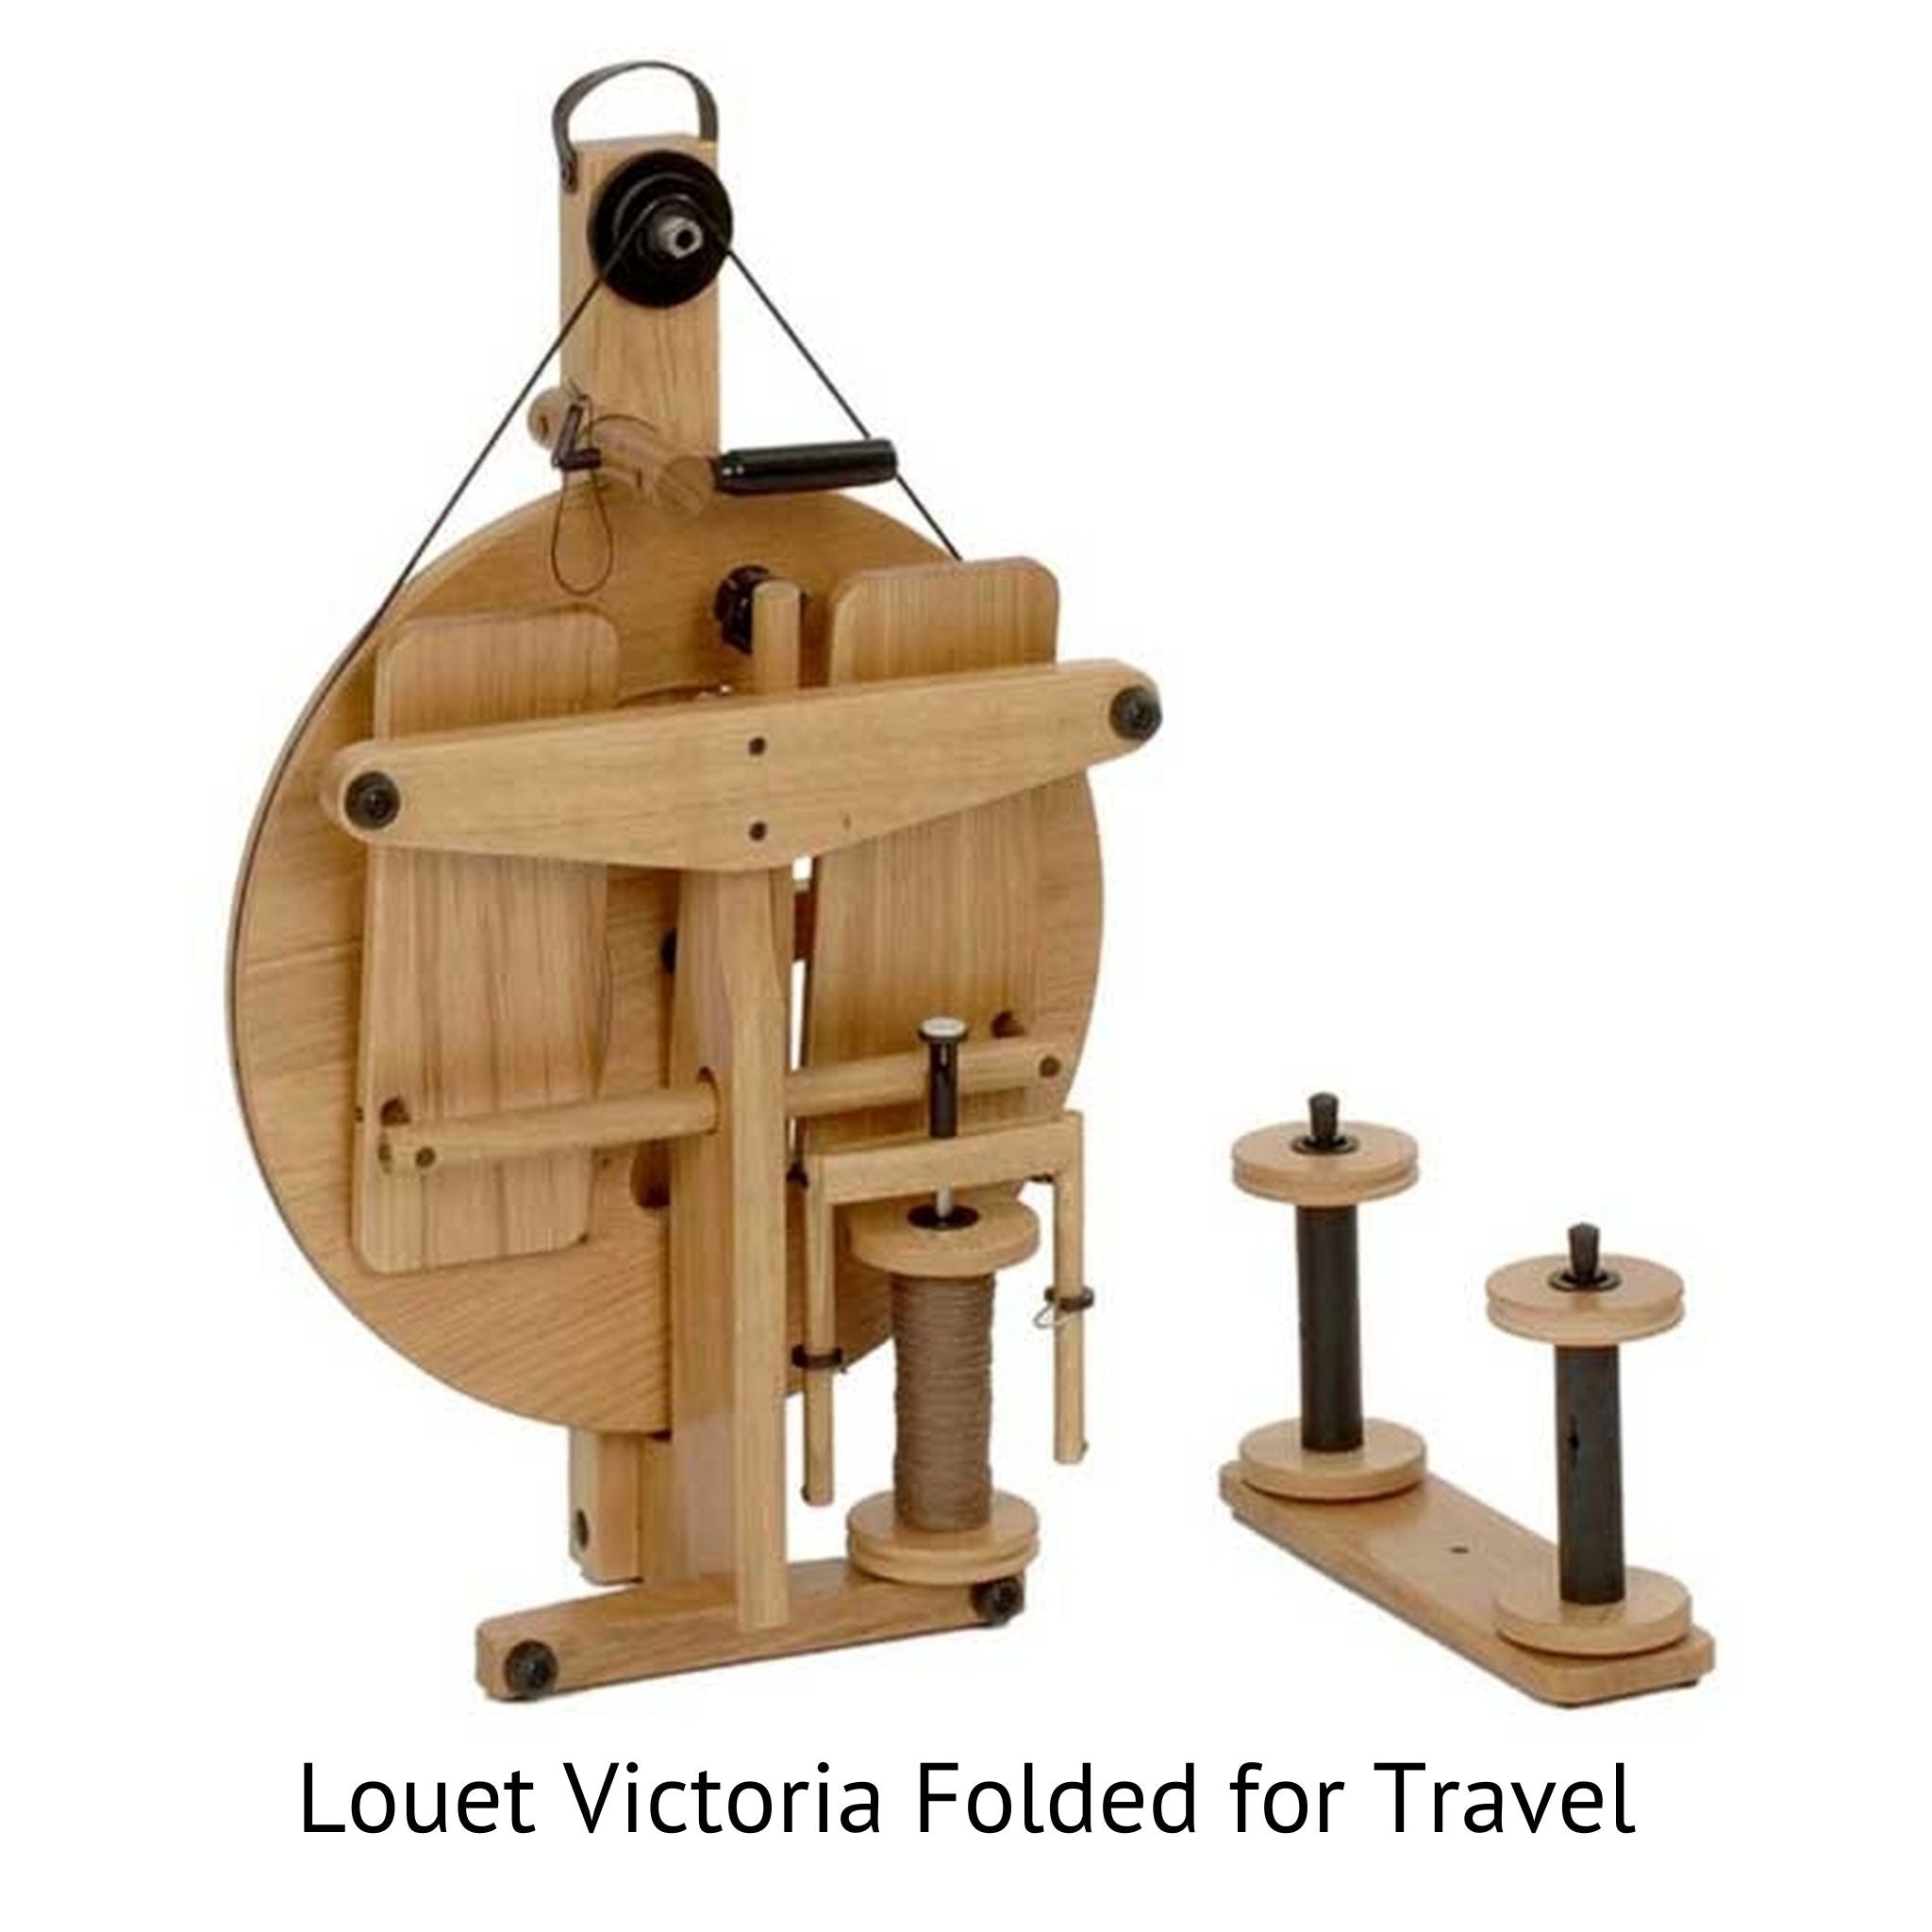 Louet Victoria Beech Spinning Wheel Package - Fall Art Yarn Special